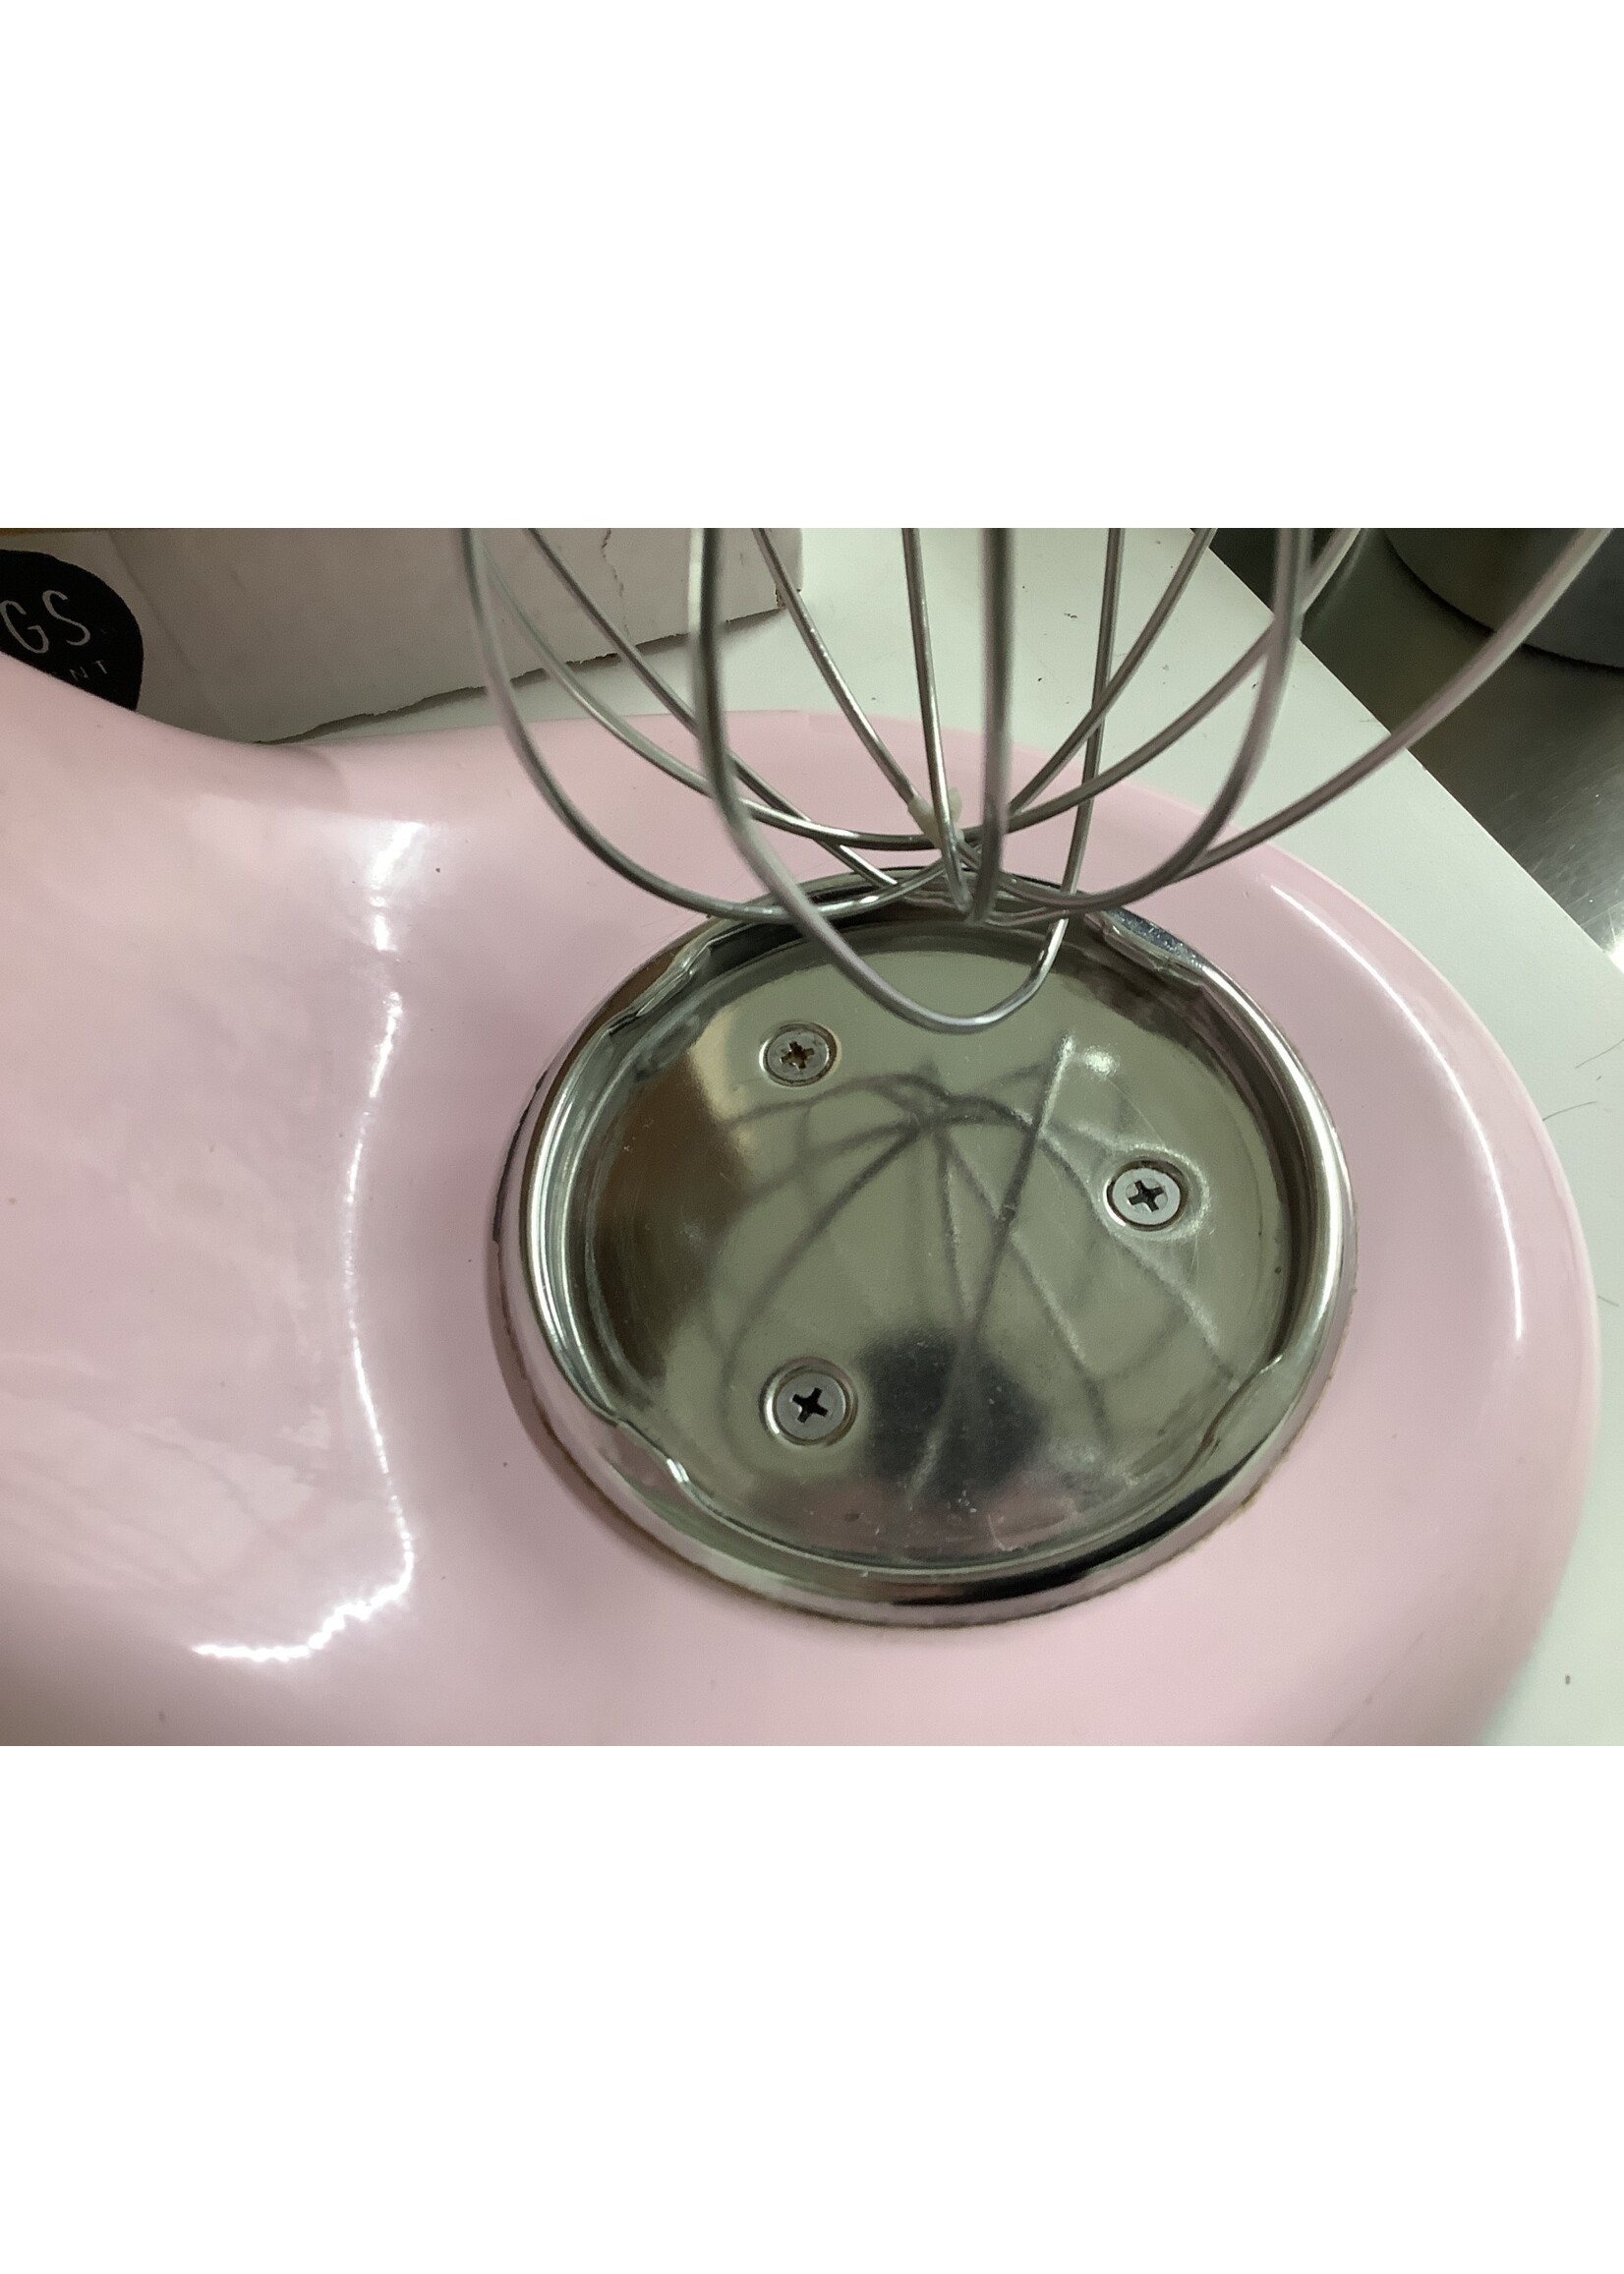 KitchenAid RRK150PK 5 Qt. Artisan Series - Pink (Used) 